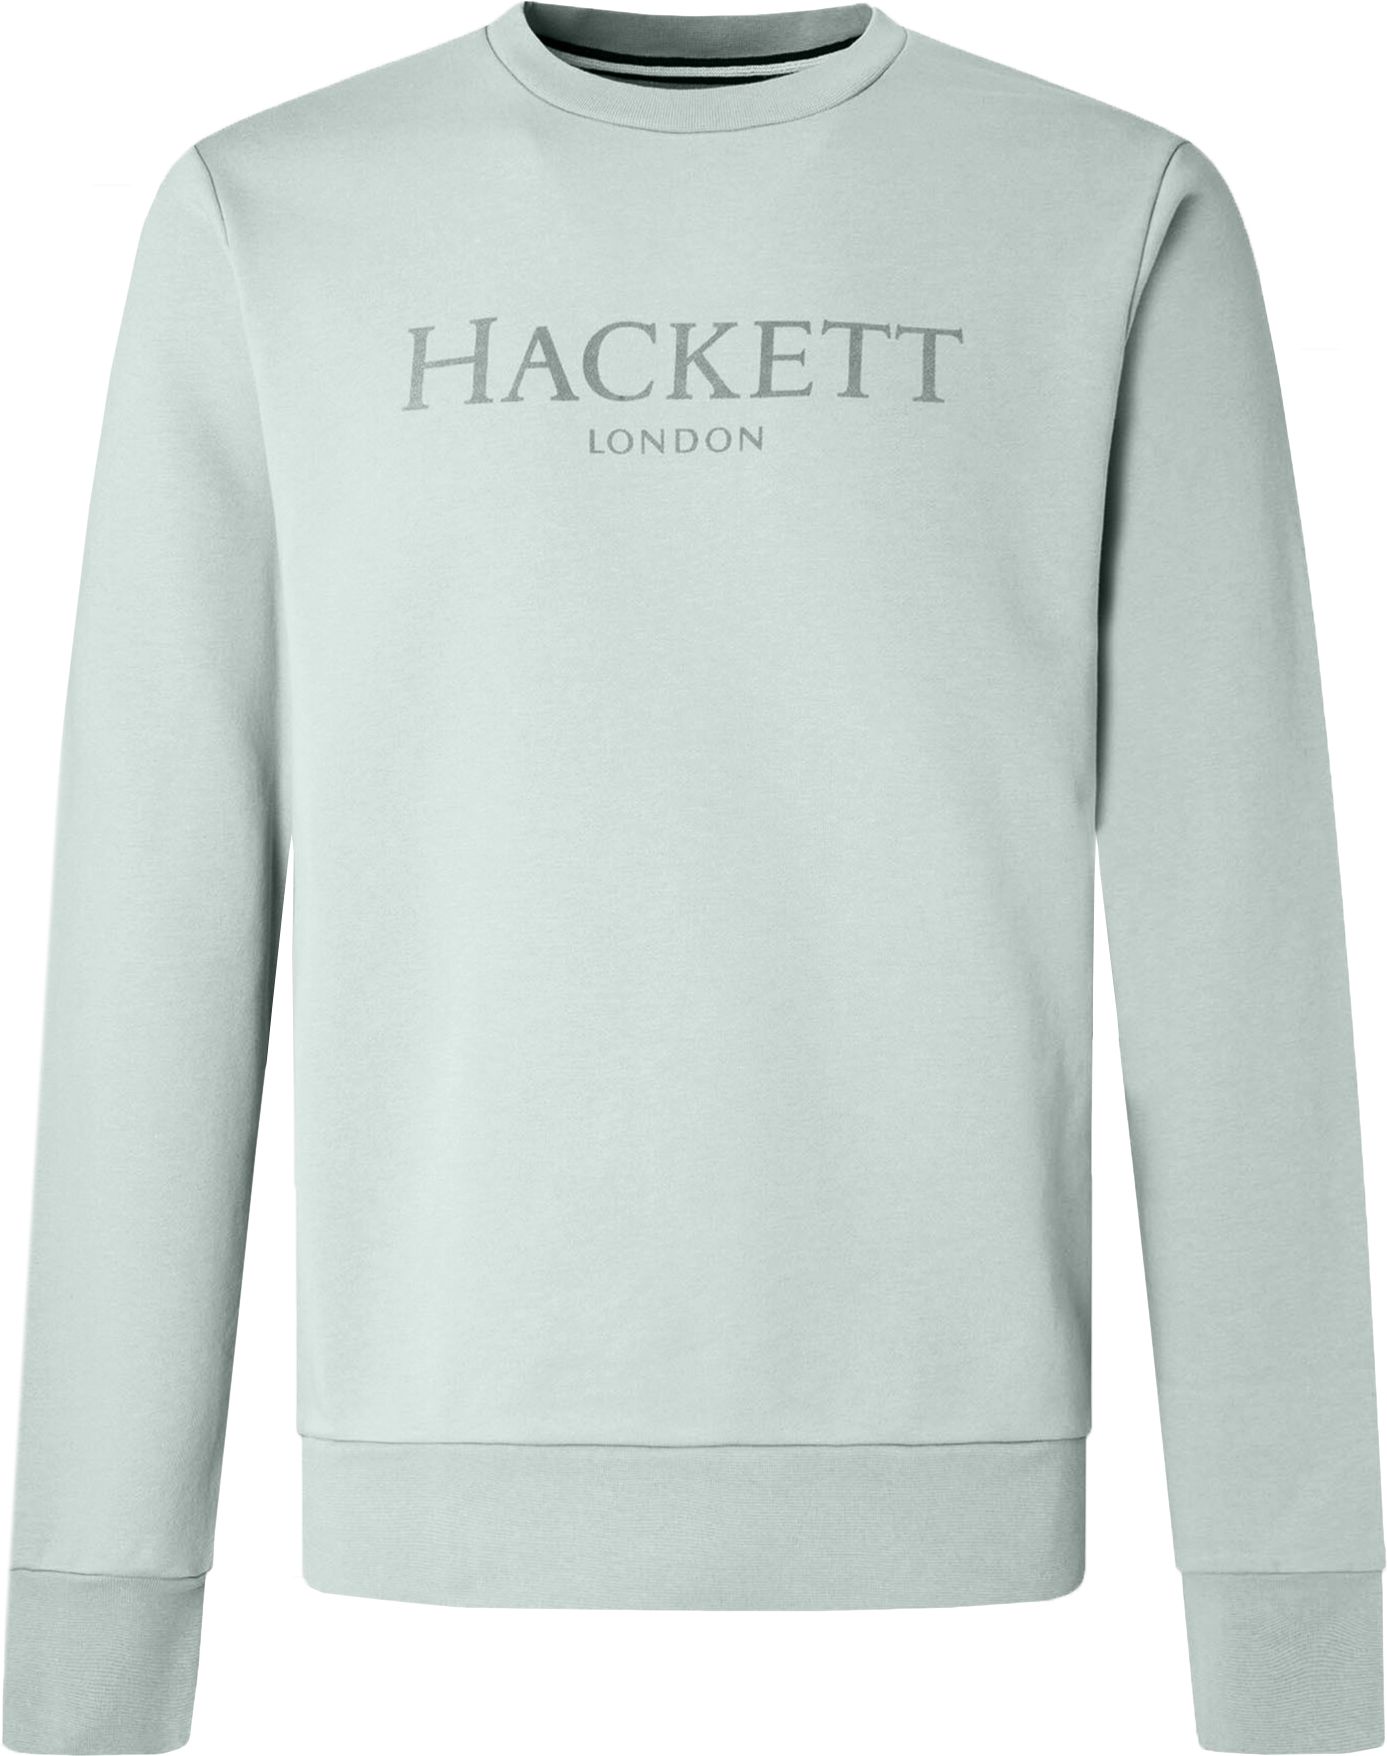 Hackett Sweater Logo Green size L